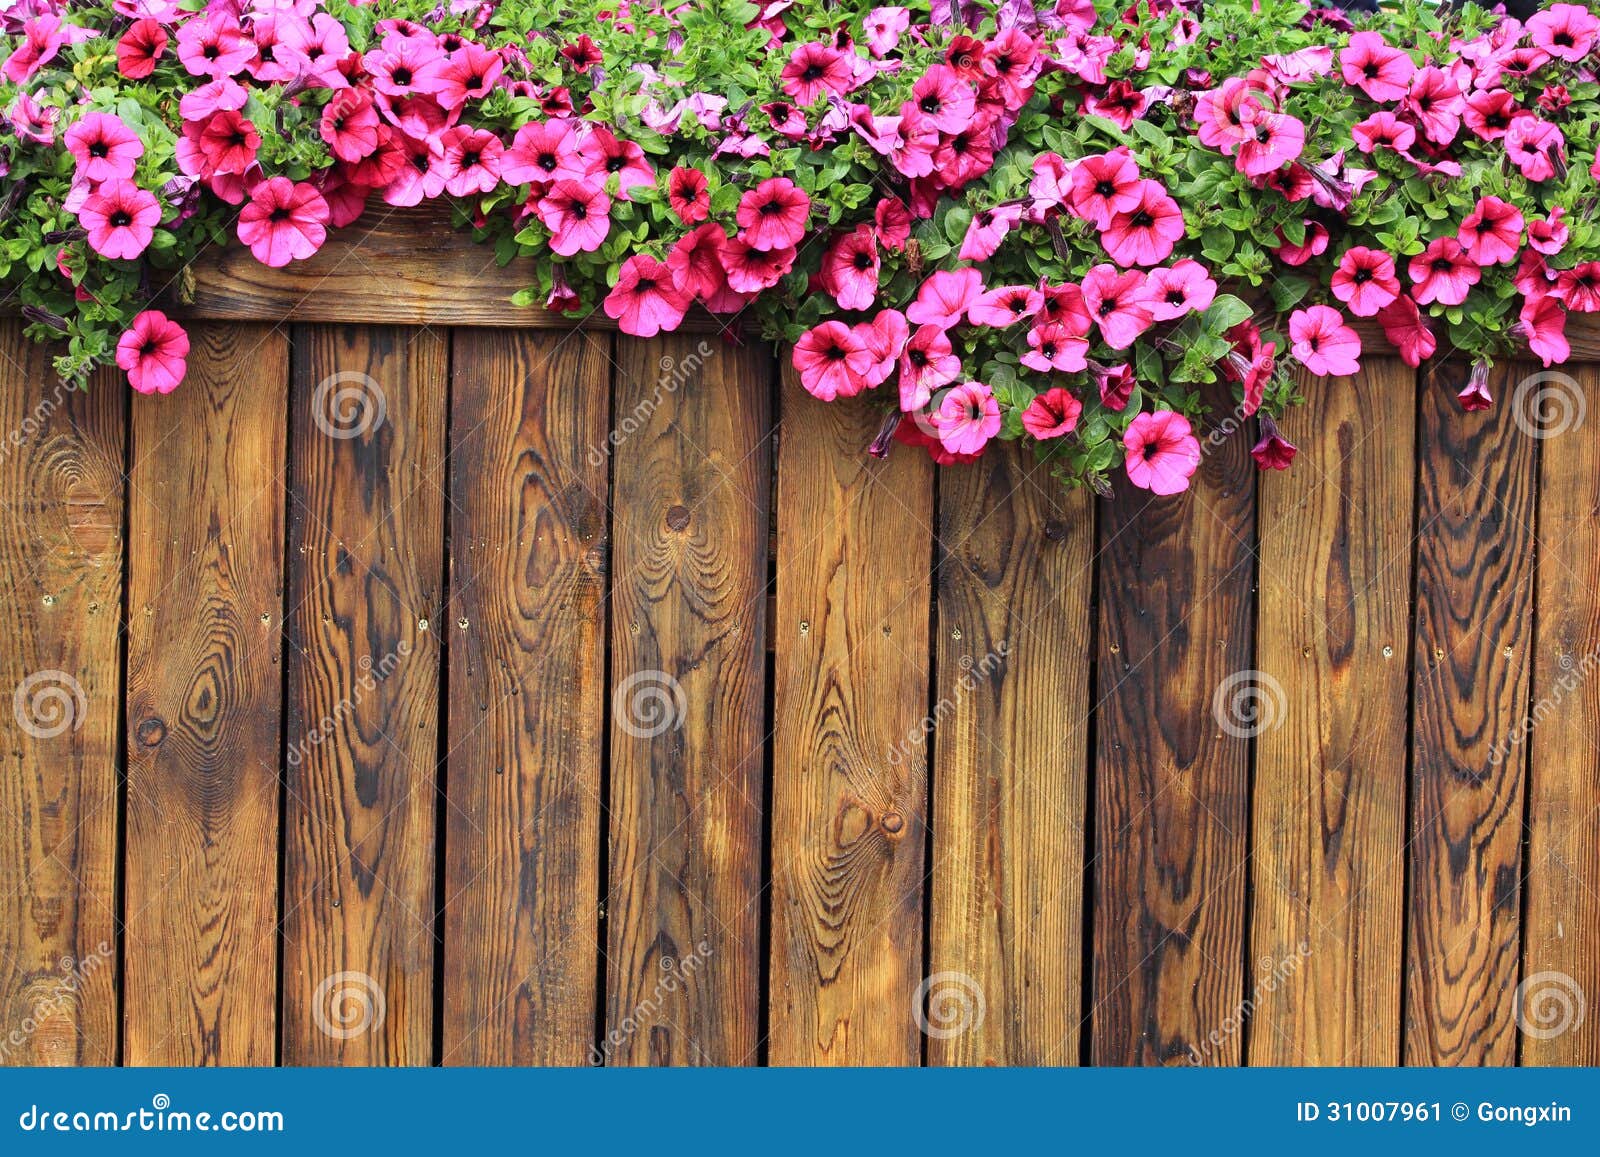 Flowers Wood Texture Background Stock Image - Image: 31007961